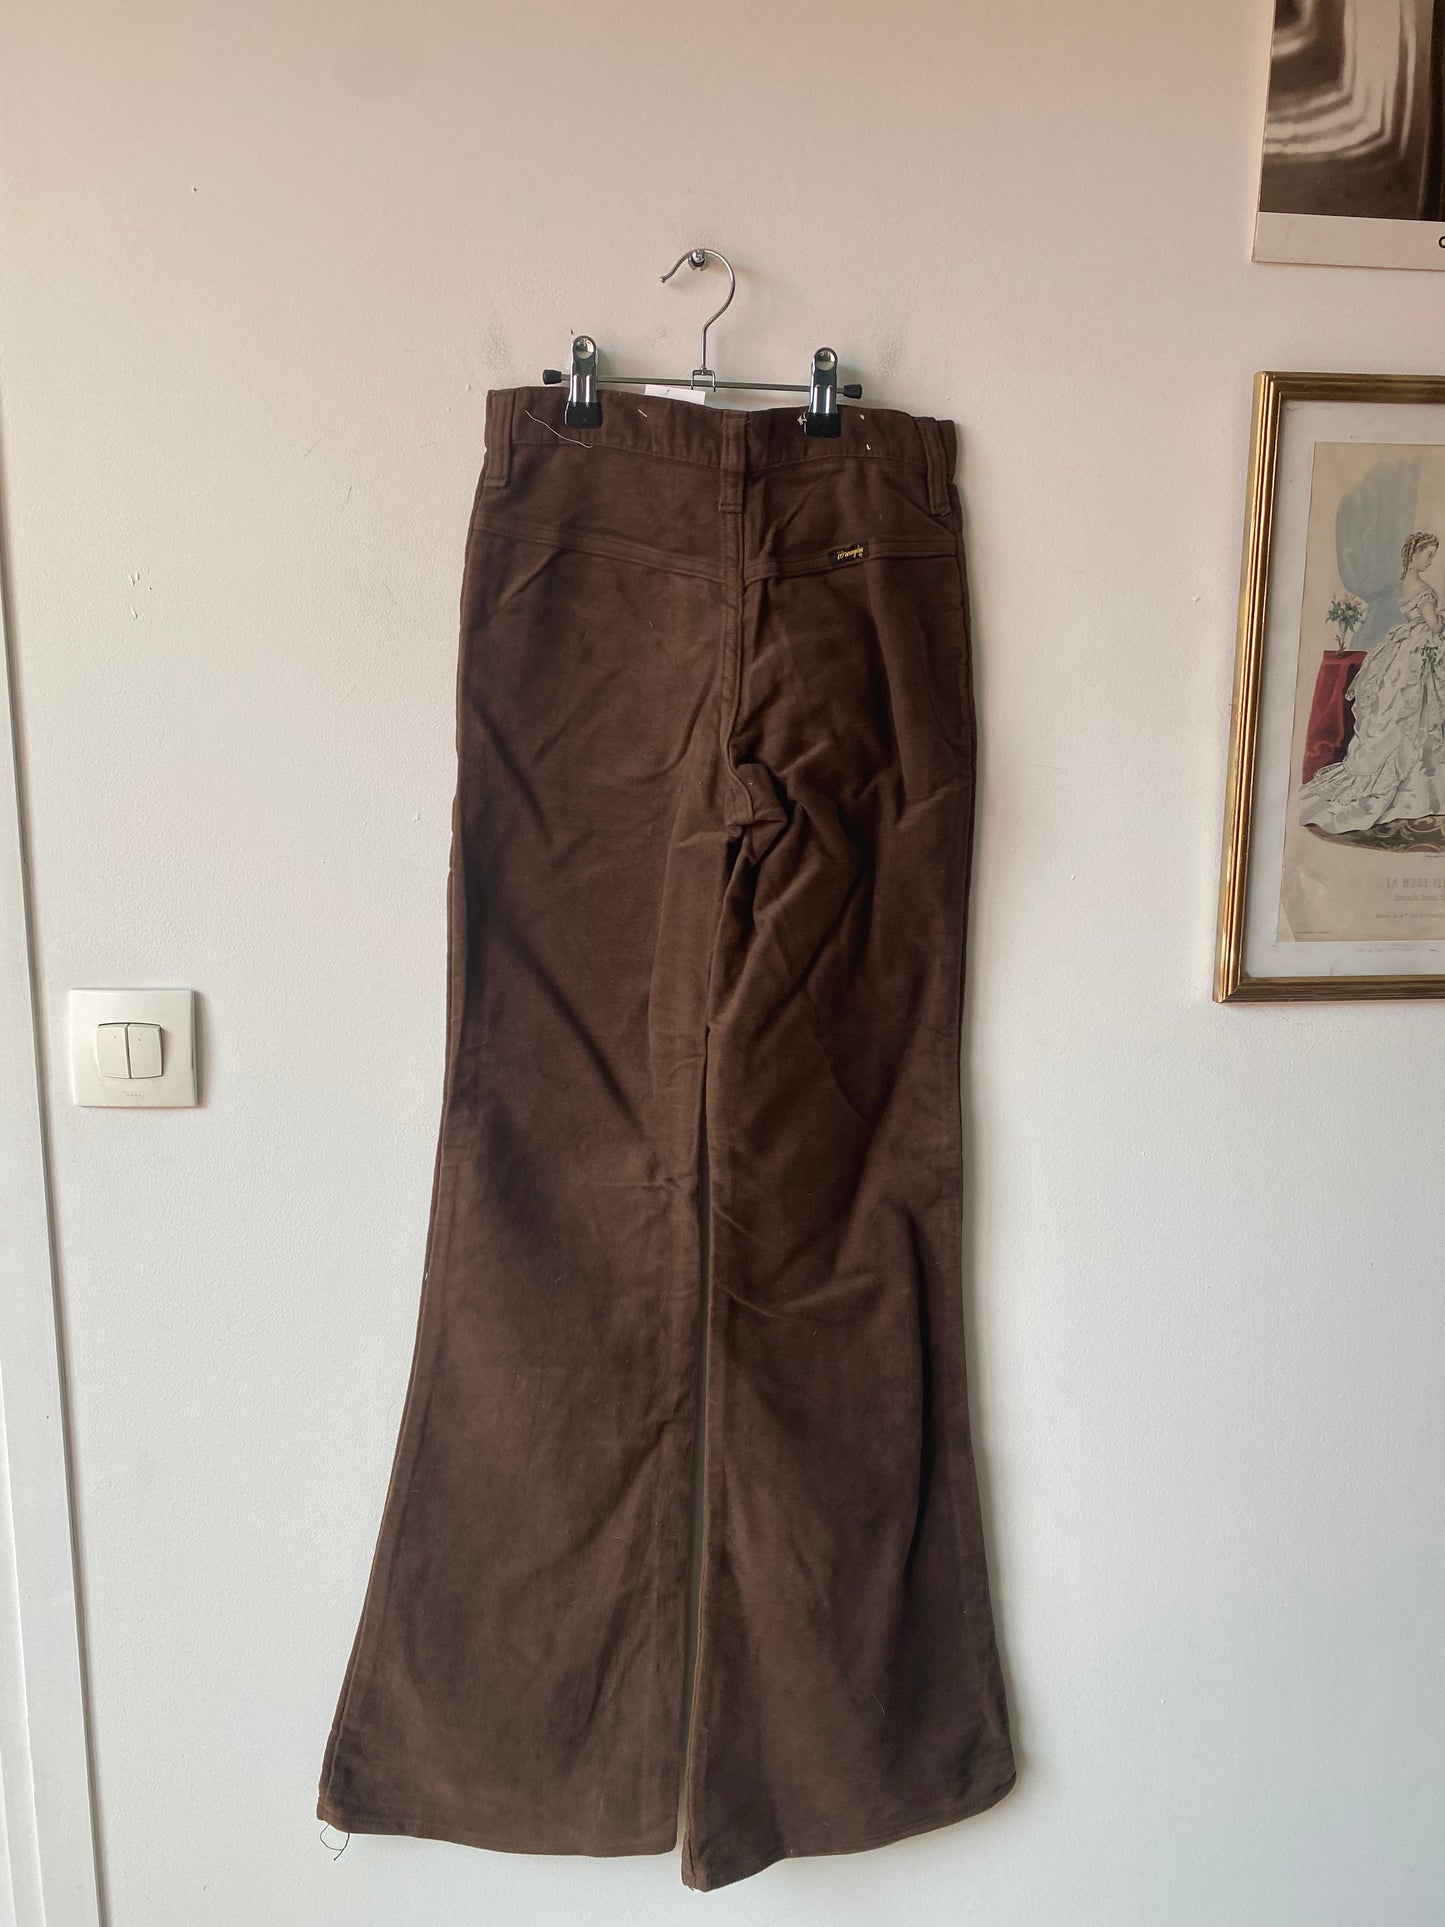 Pantalon marron 70s